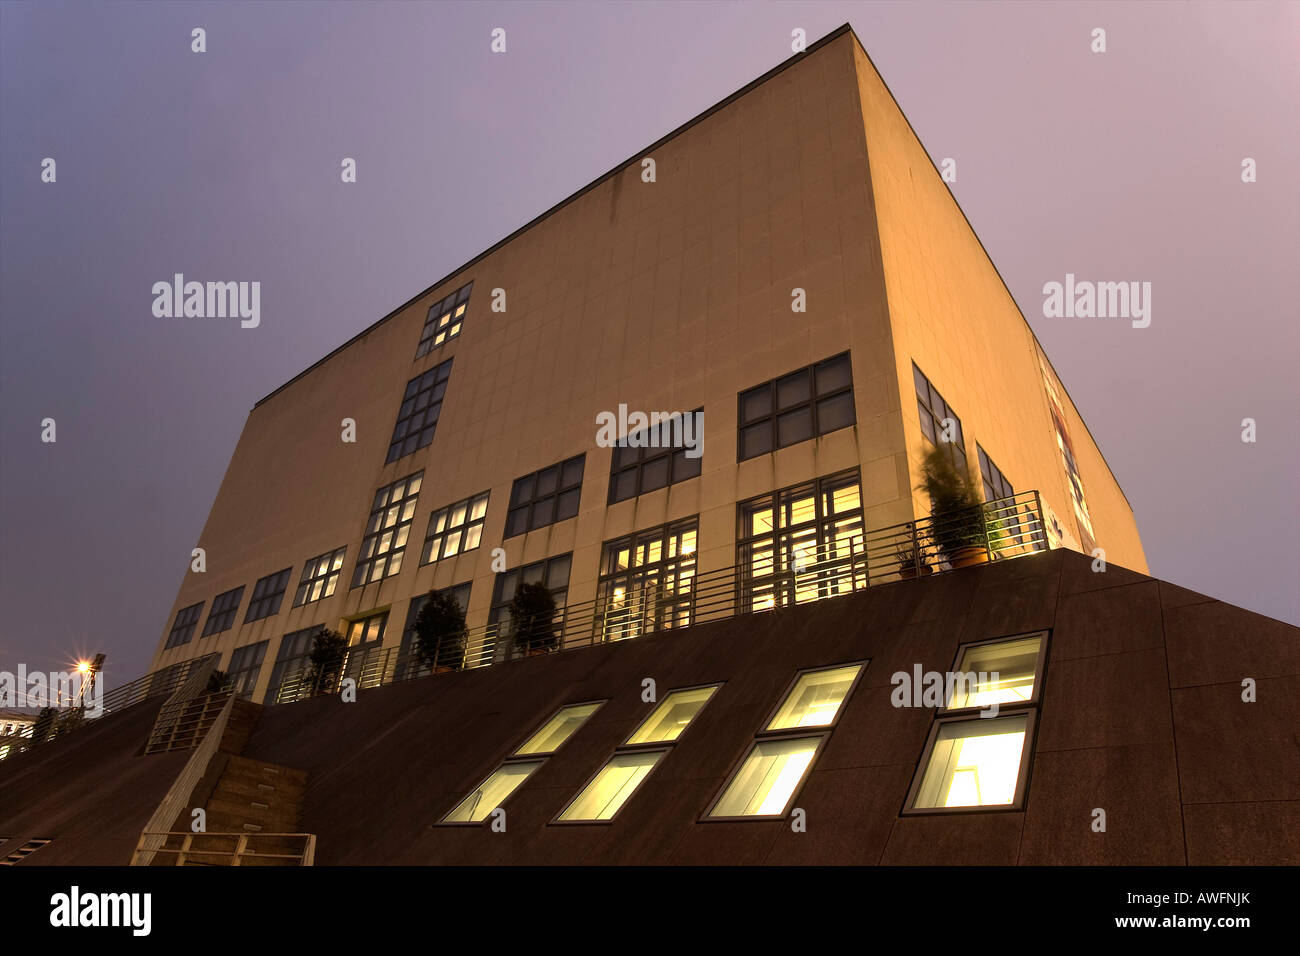 New building of the art museum Hamburger Kunsthalle - Gallery of the present in evening light - city of Hamburg - Hamburg, Germ Stock Photo